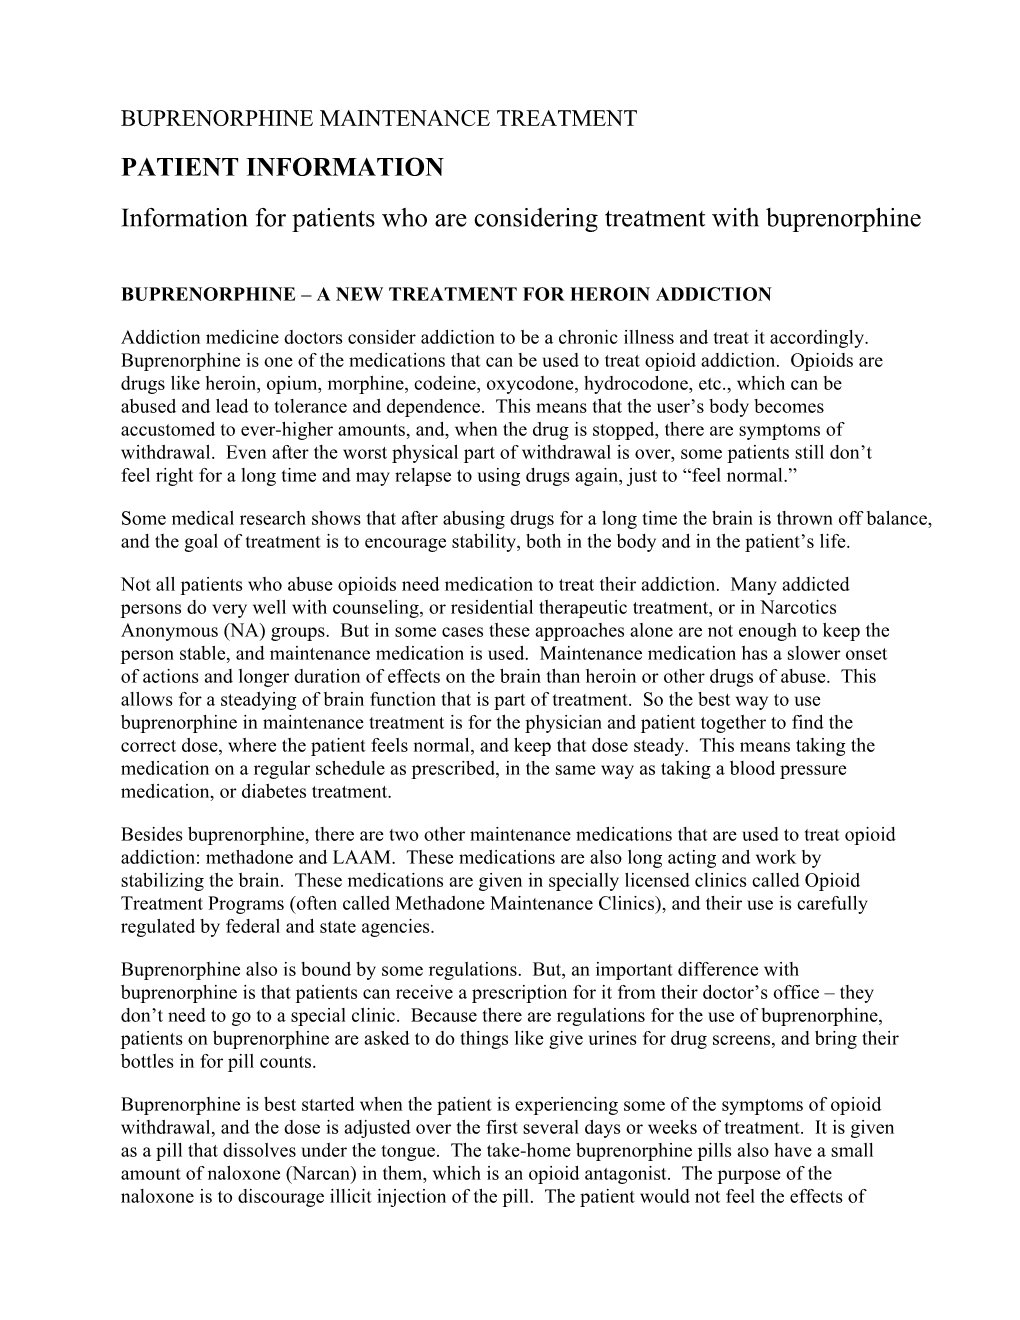 Buprenorphine Patient S Description of Treatment